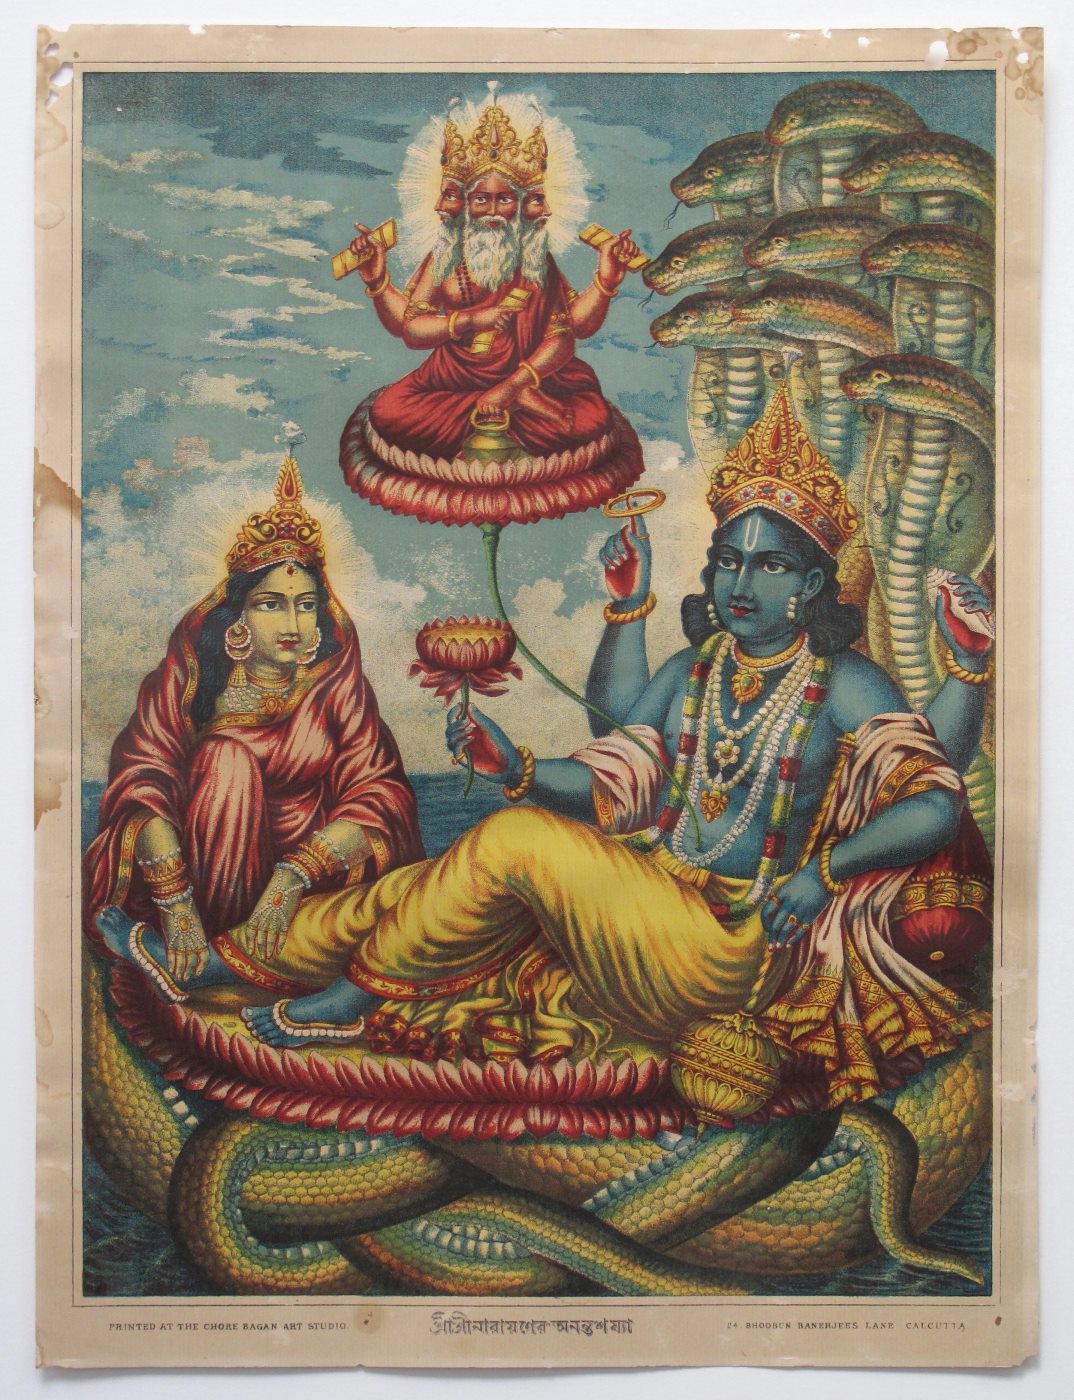 Anantashayi Vishnu - Chore Bagan Art Studio, Colour Lithograph, Calcutta (Kolkata), c1890